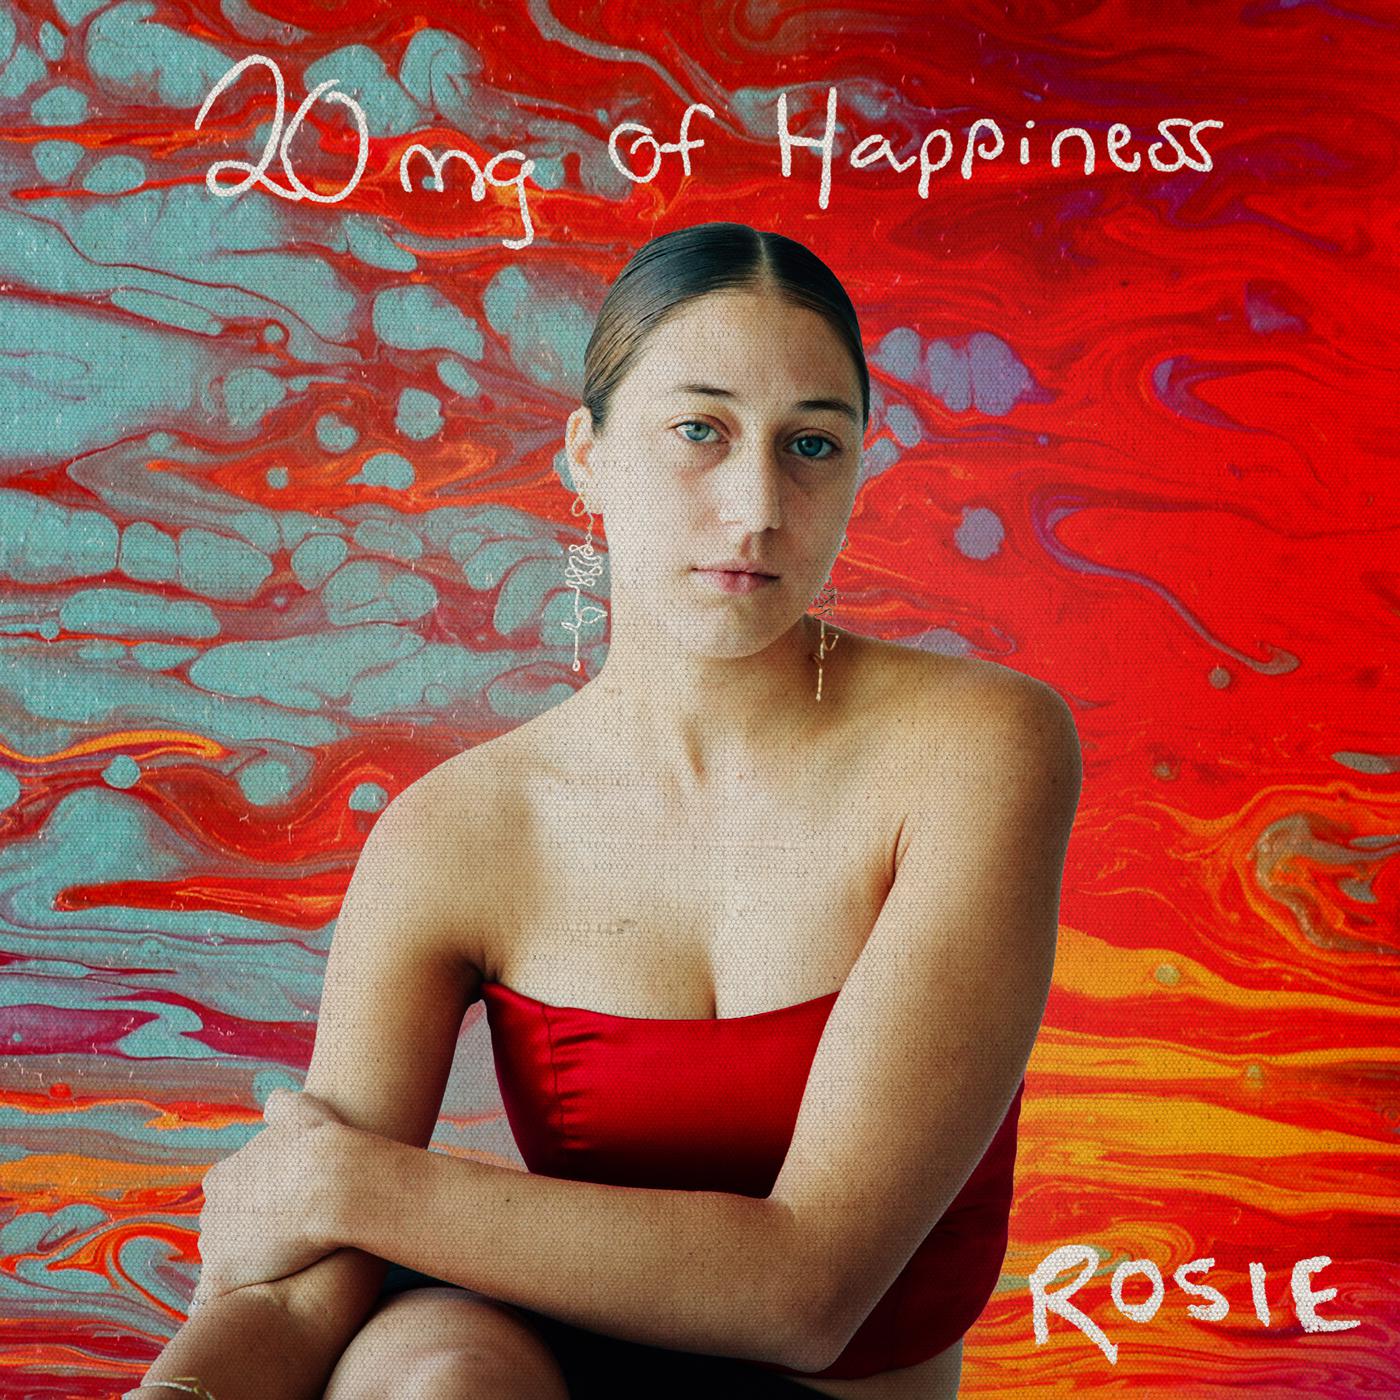 Sad Sad Sad歌词 歌手ROSIE-专辑20mg of Happiness-单曲《Sad Sad Sad》LRC歌词下载